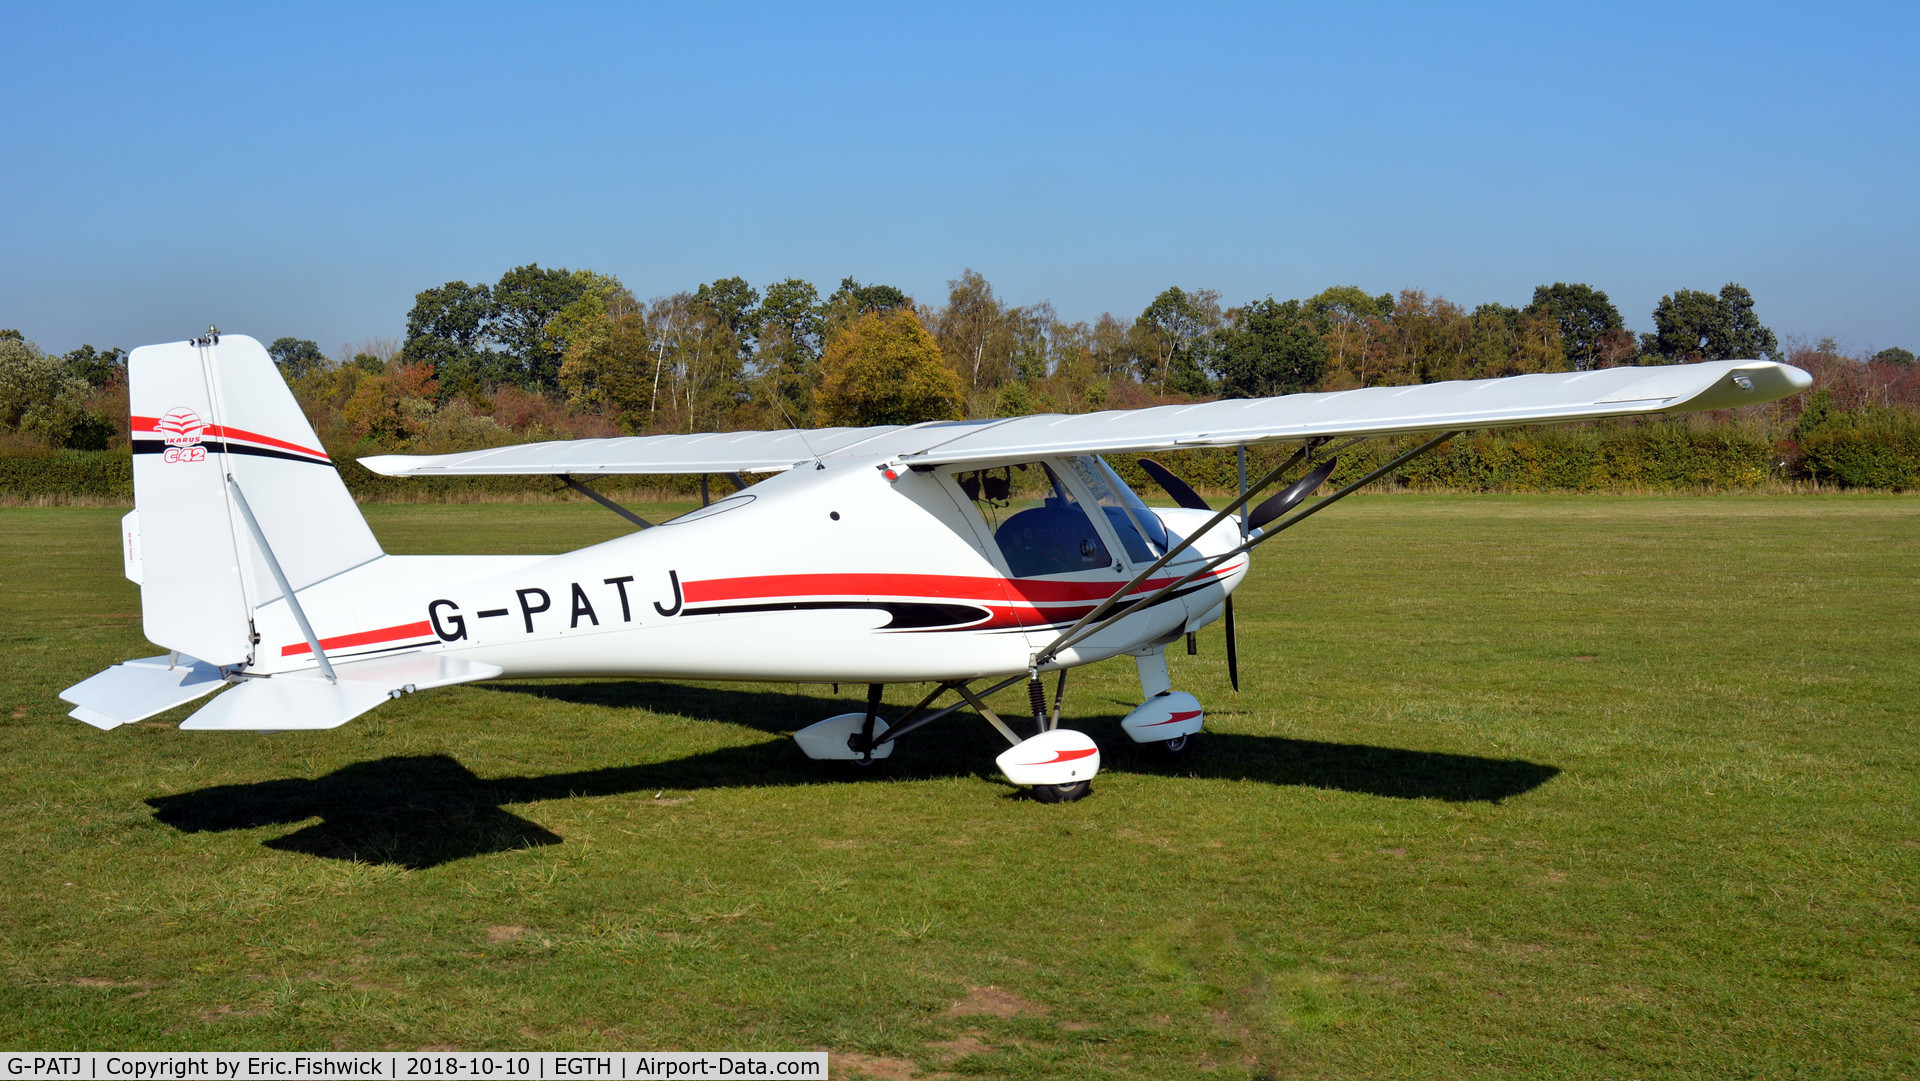 G-PATJ, 2015 Comco Ikarus C42 FB80 Bravo C/N 1509-7421, 2. G-PATJ at The Shuttleworth Collection, Oct. 2018.